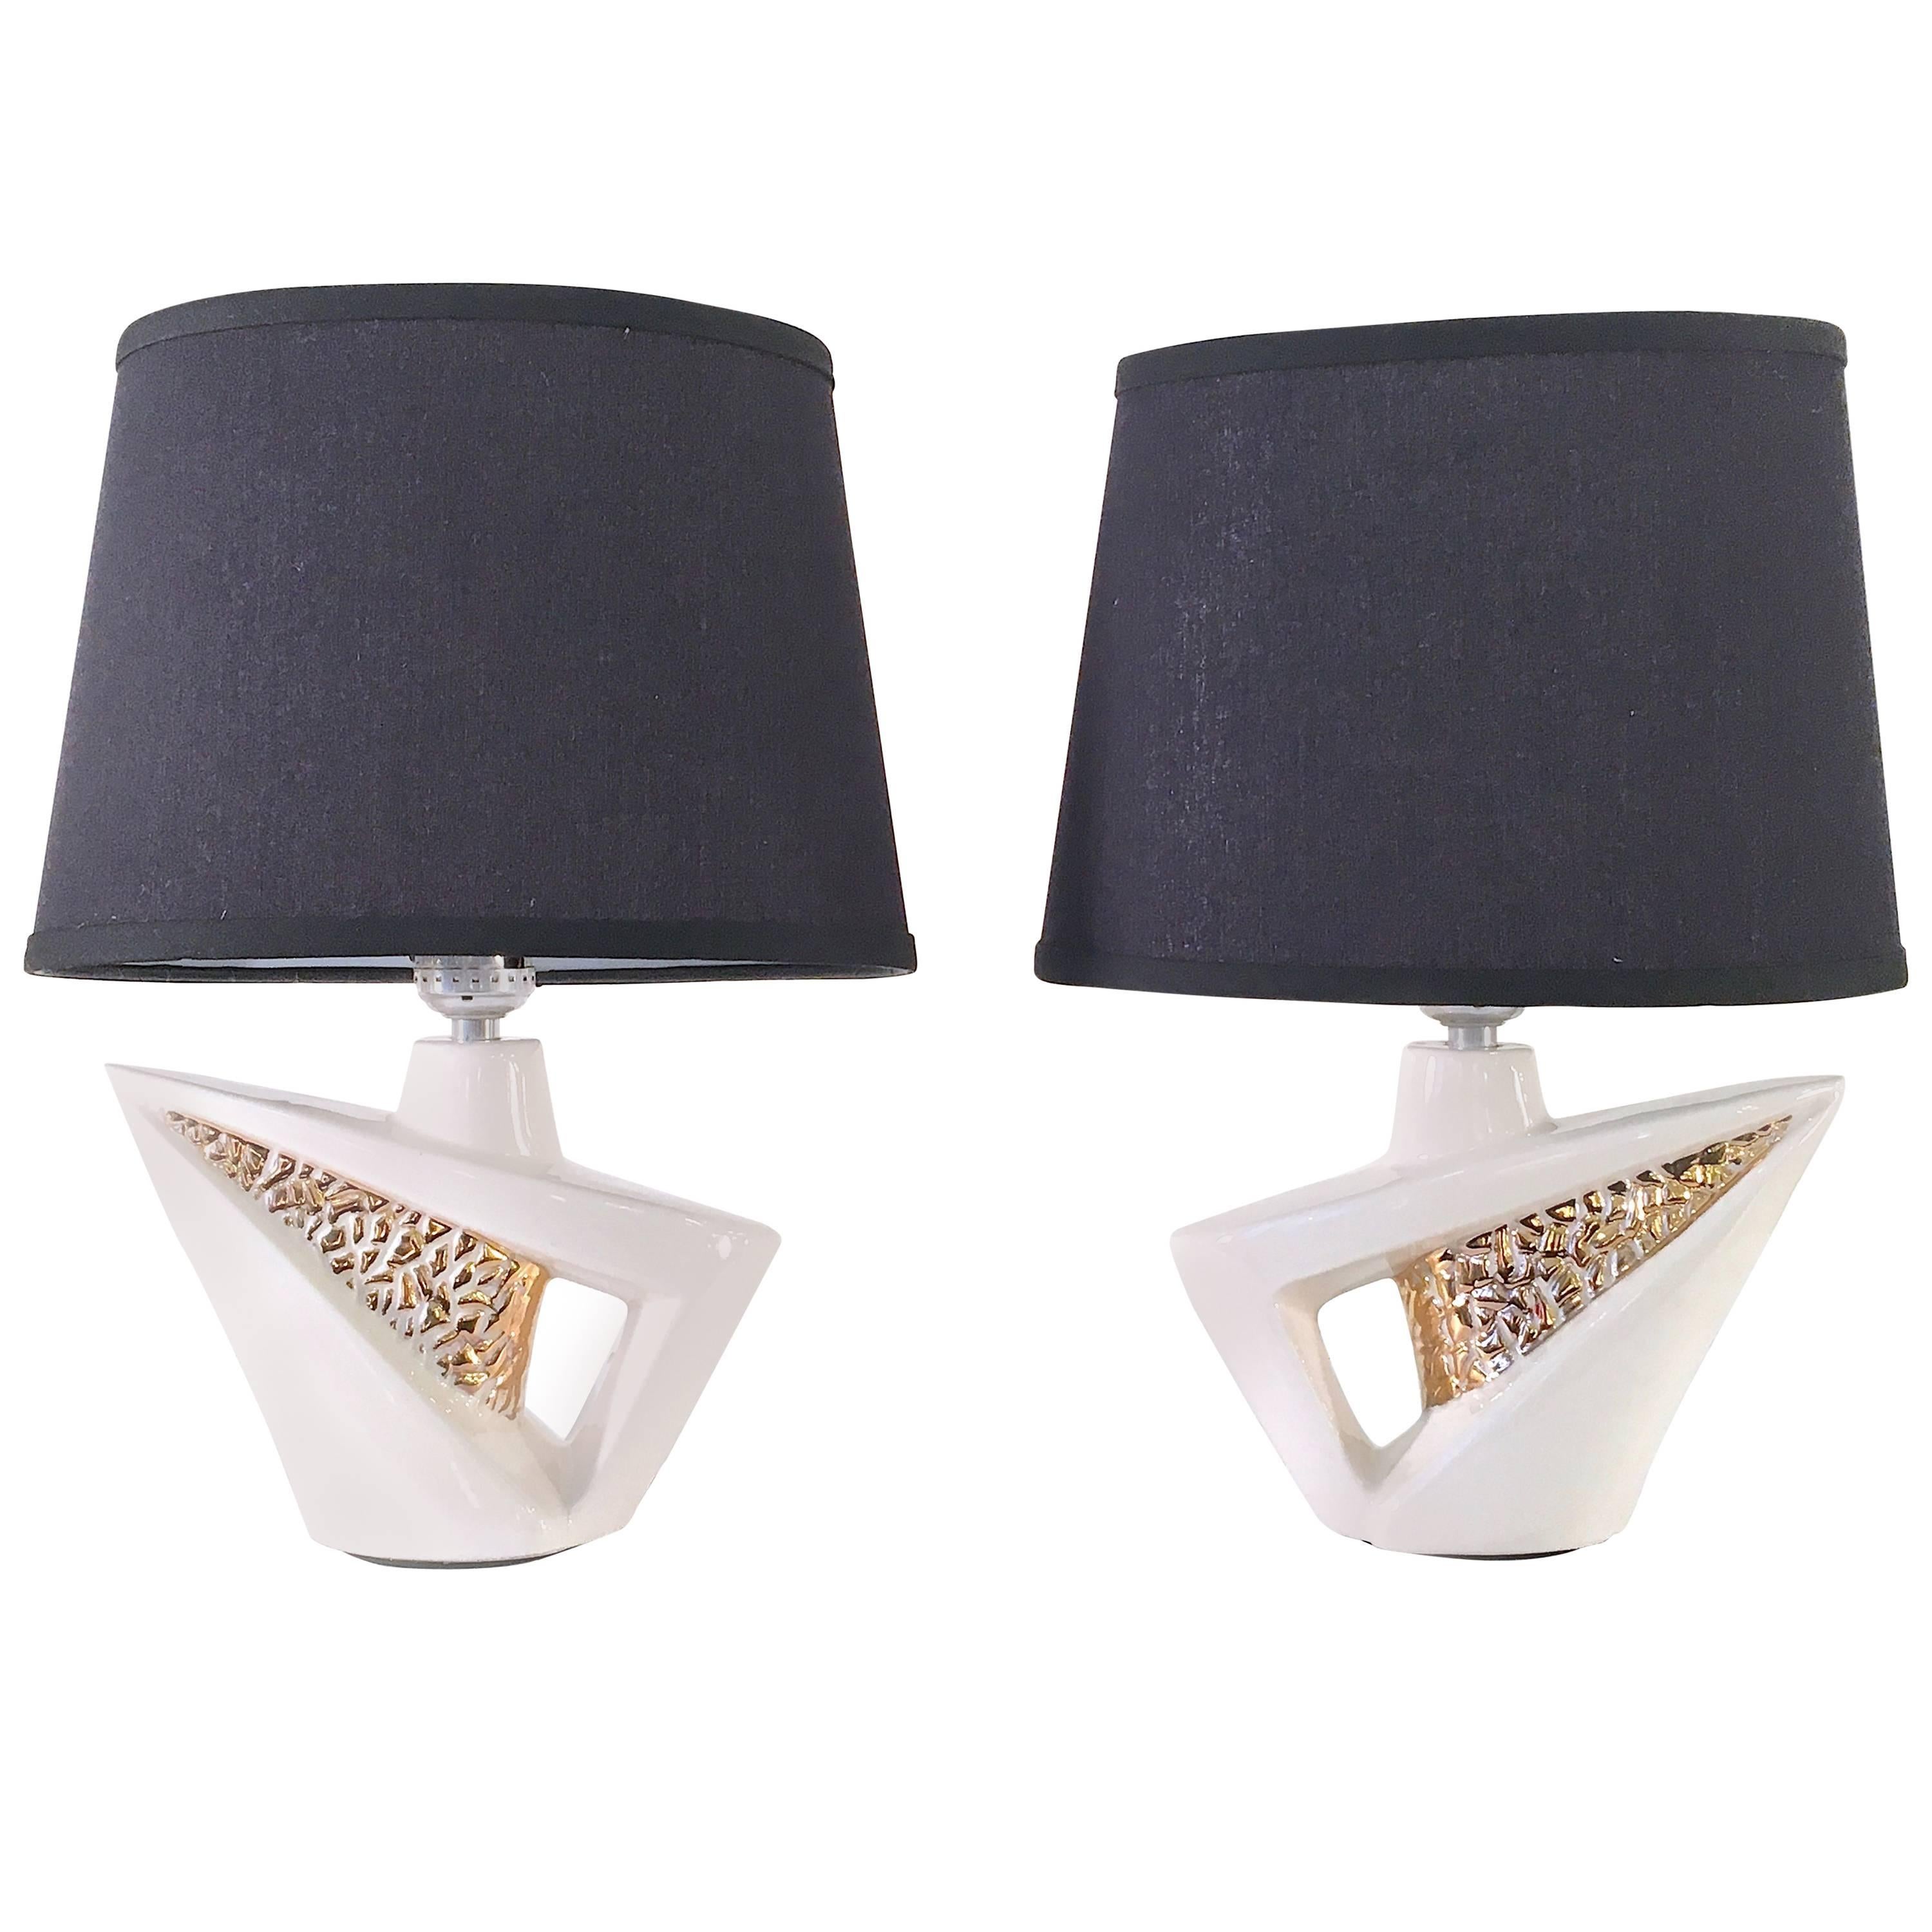 Pair of Sculptural Petite Accent or Boudoir Lamps For Sale